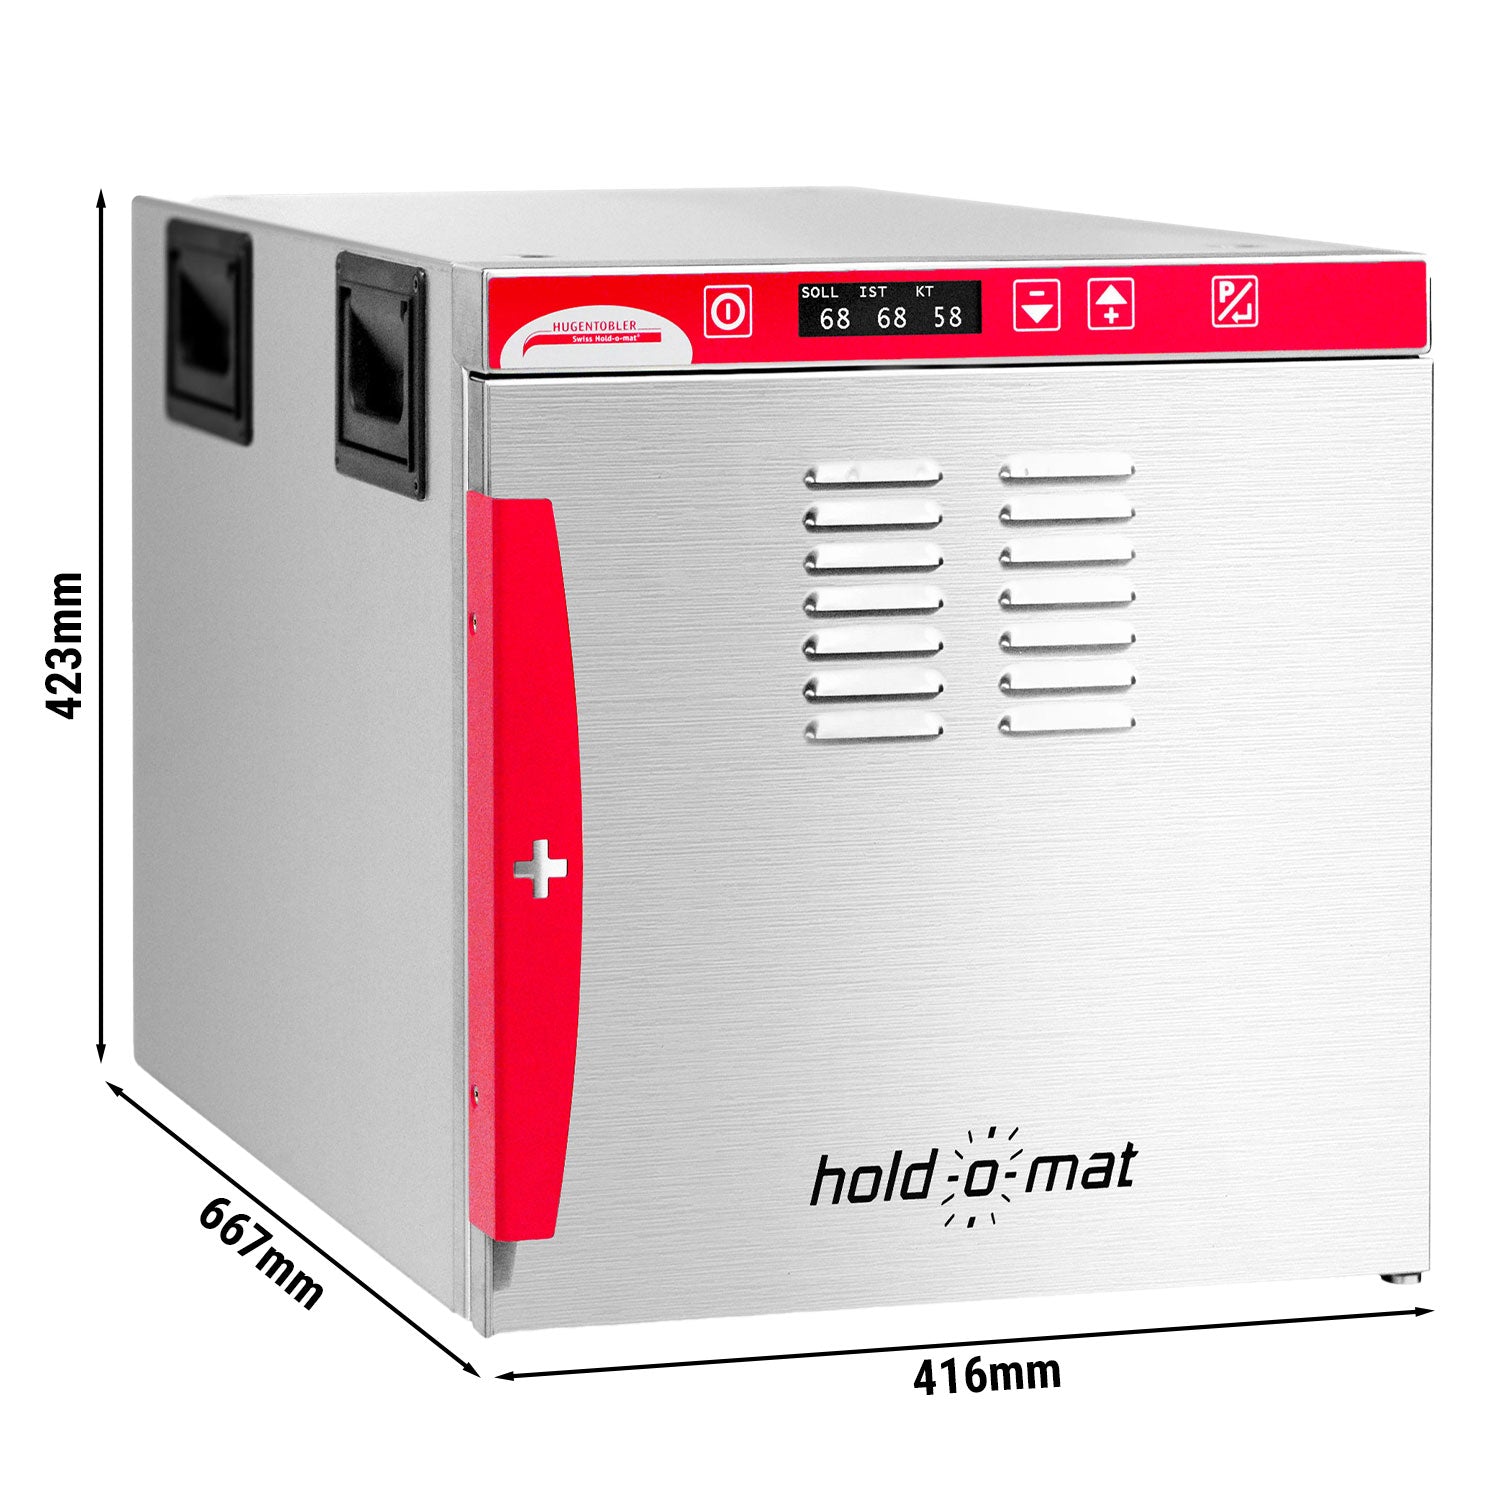 HUGENTOBLER | Hold-O-Mat 411 - Lavt koke- og varmeapparat